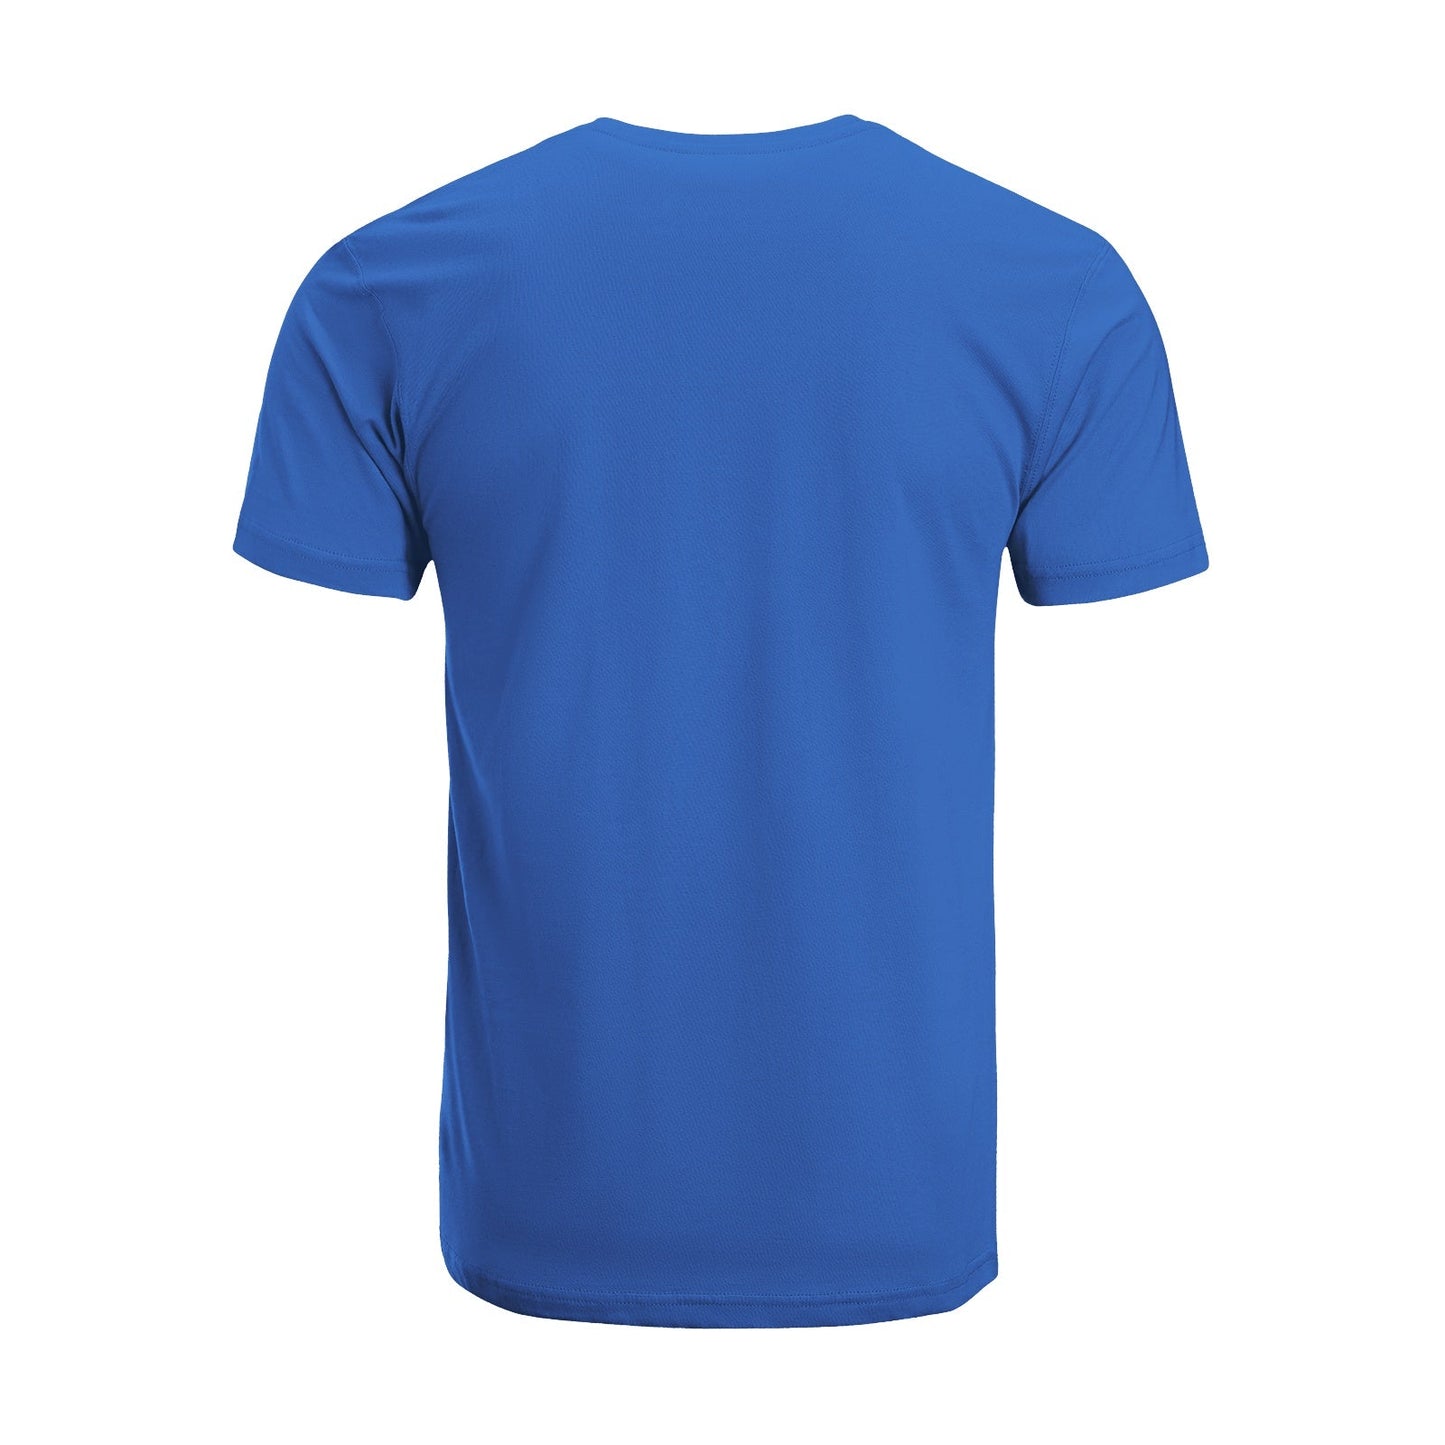 Unisex Short Sleeve Crew Neck Cotton Jersey T-Shirt MOM 23